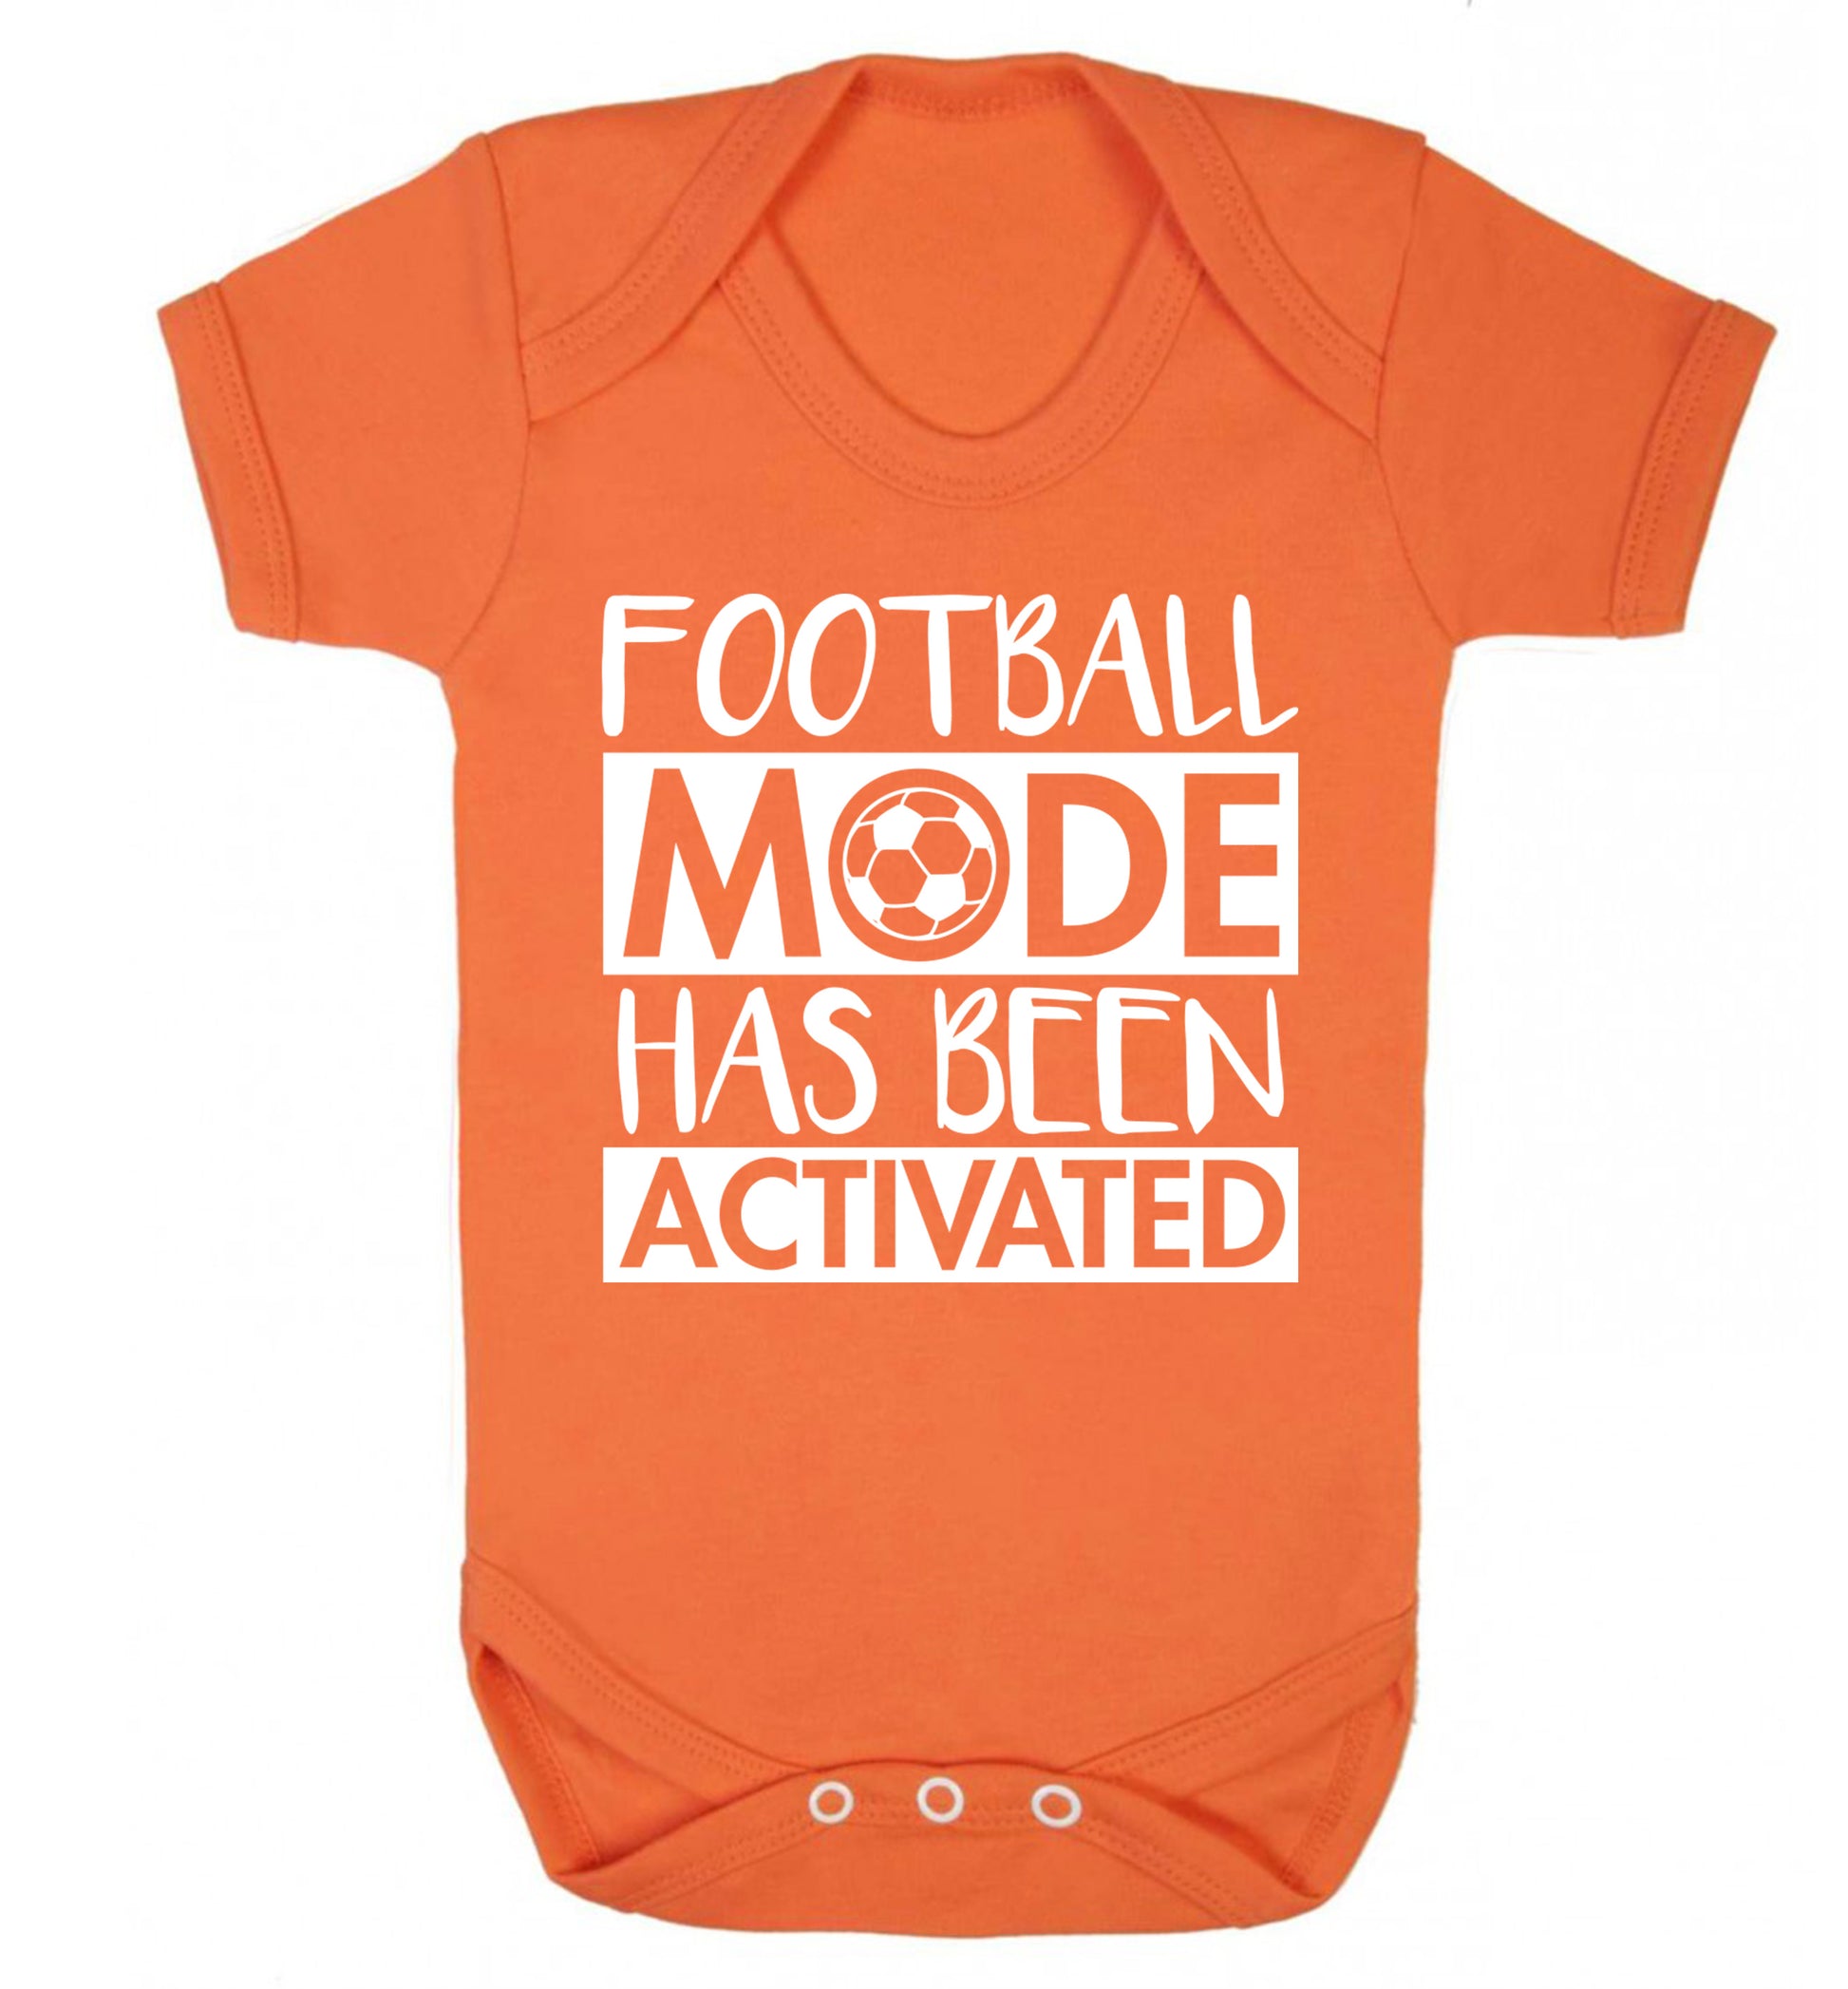 Football mode has been activated Baby Vest orange 18-24 months